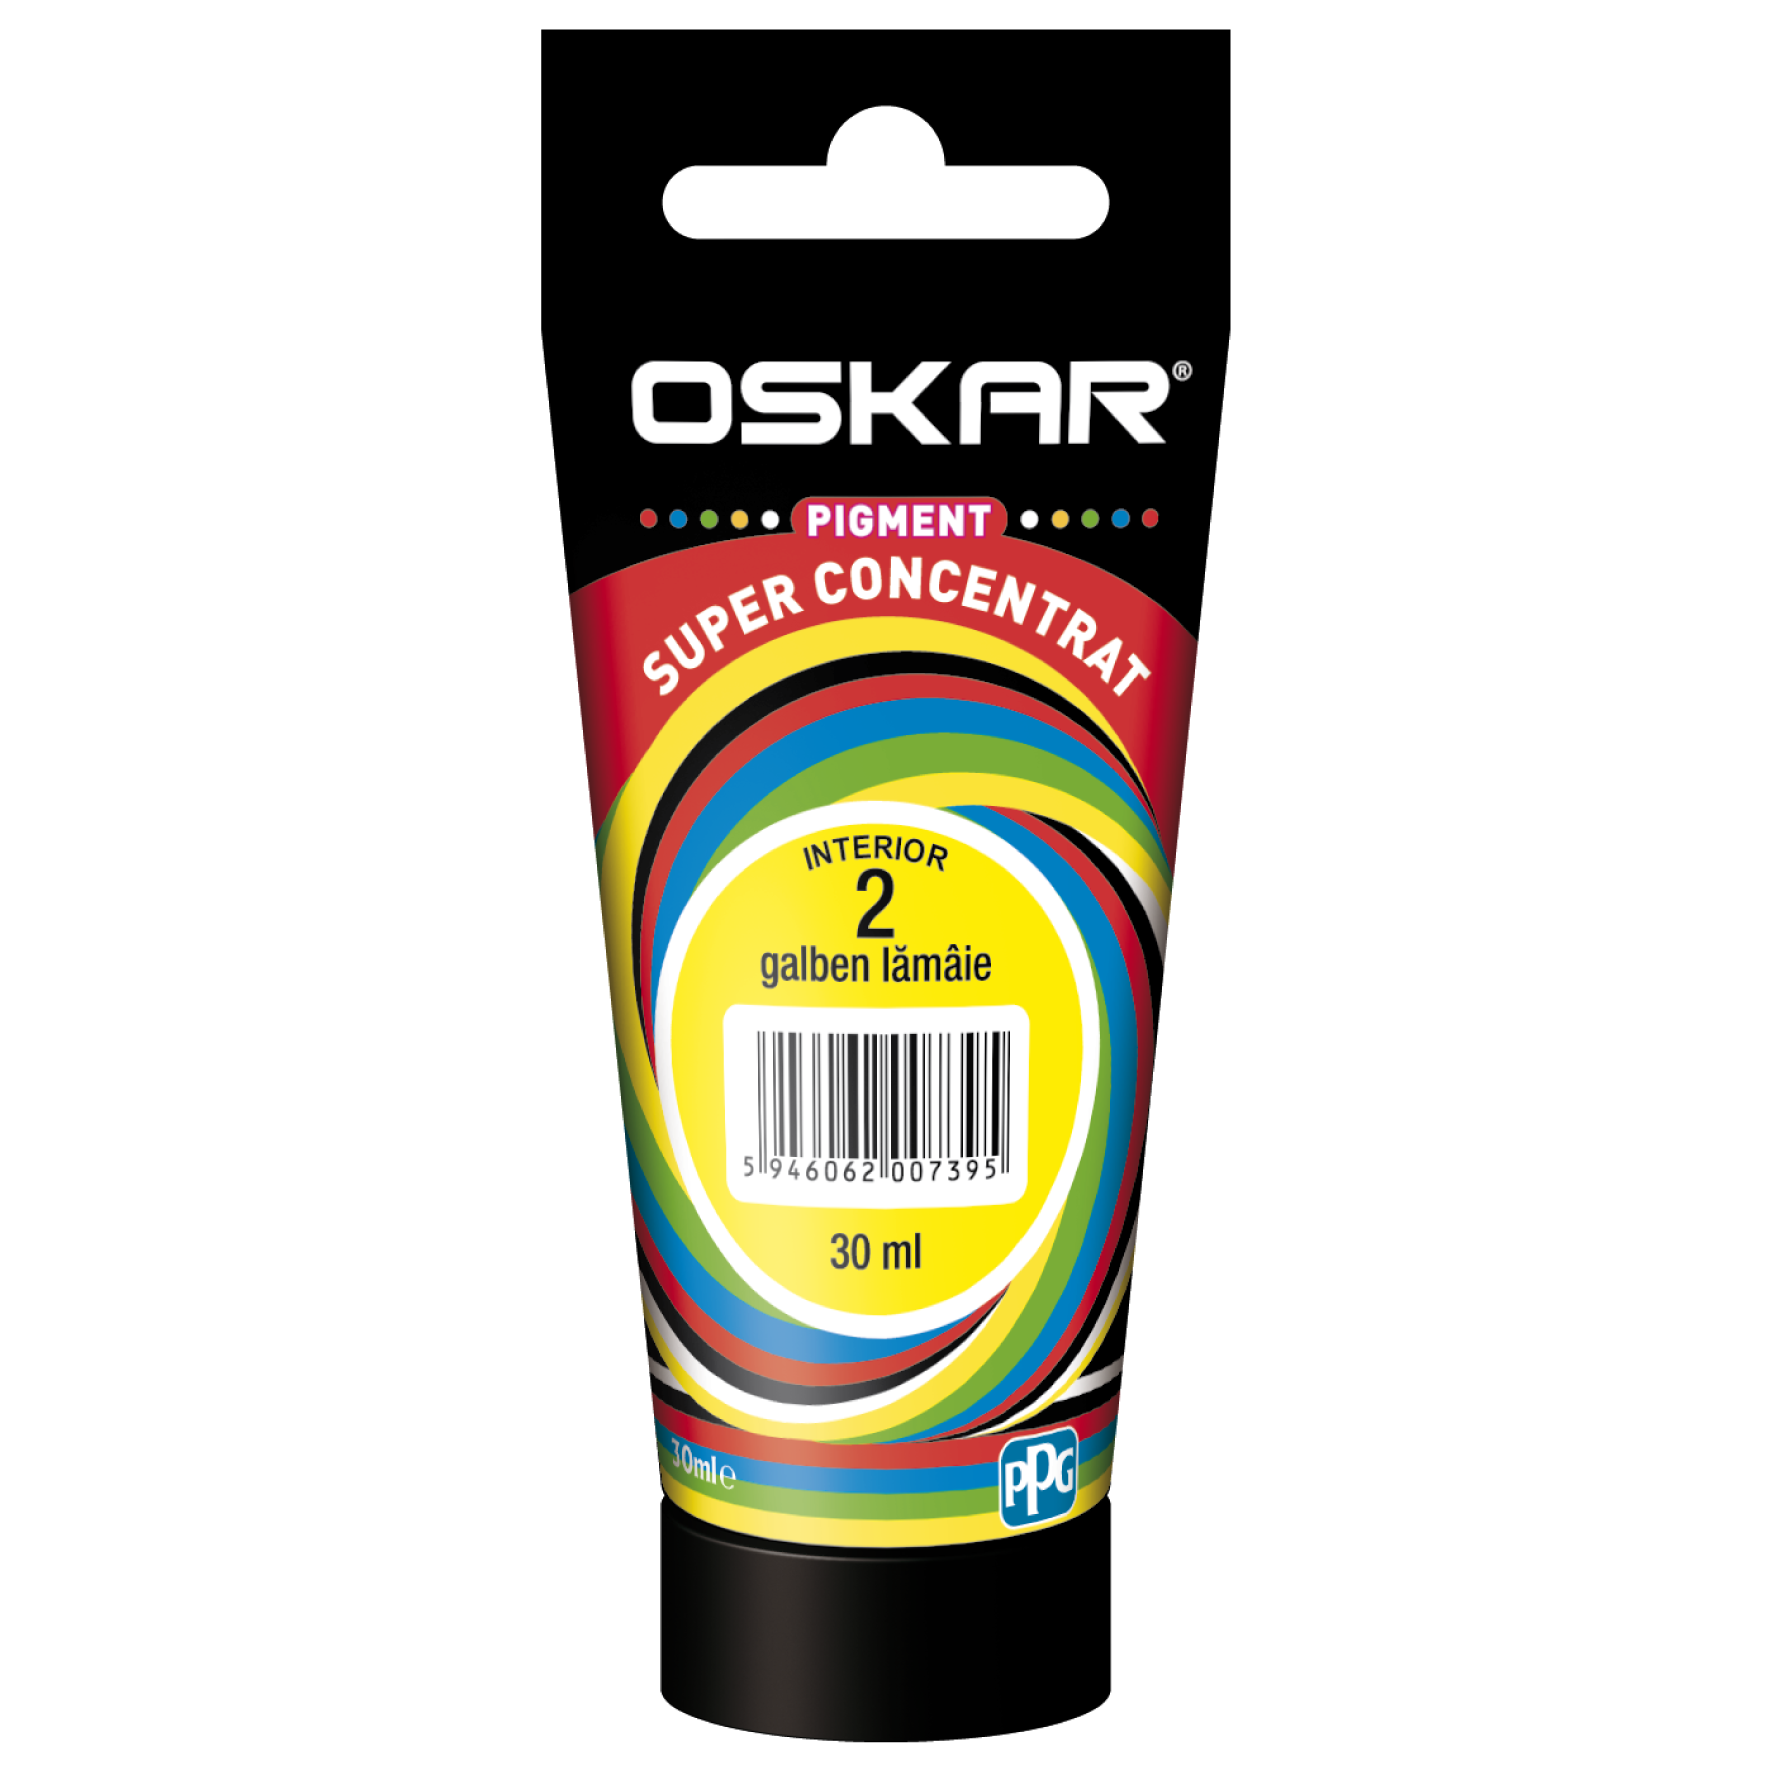 Pigment vopsea lavabila Oskar super concentrat, galben lamaie 2, 30 ml Coloranti